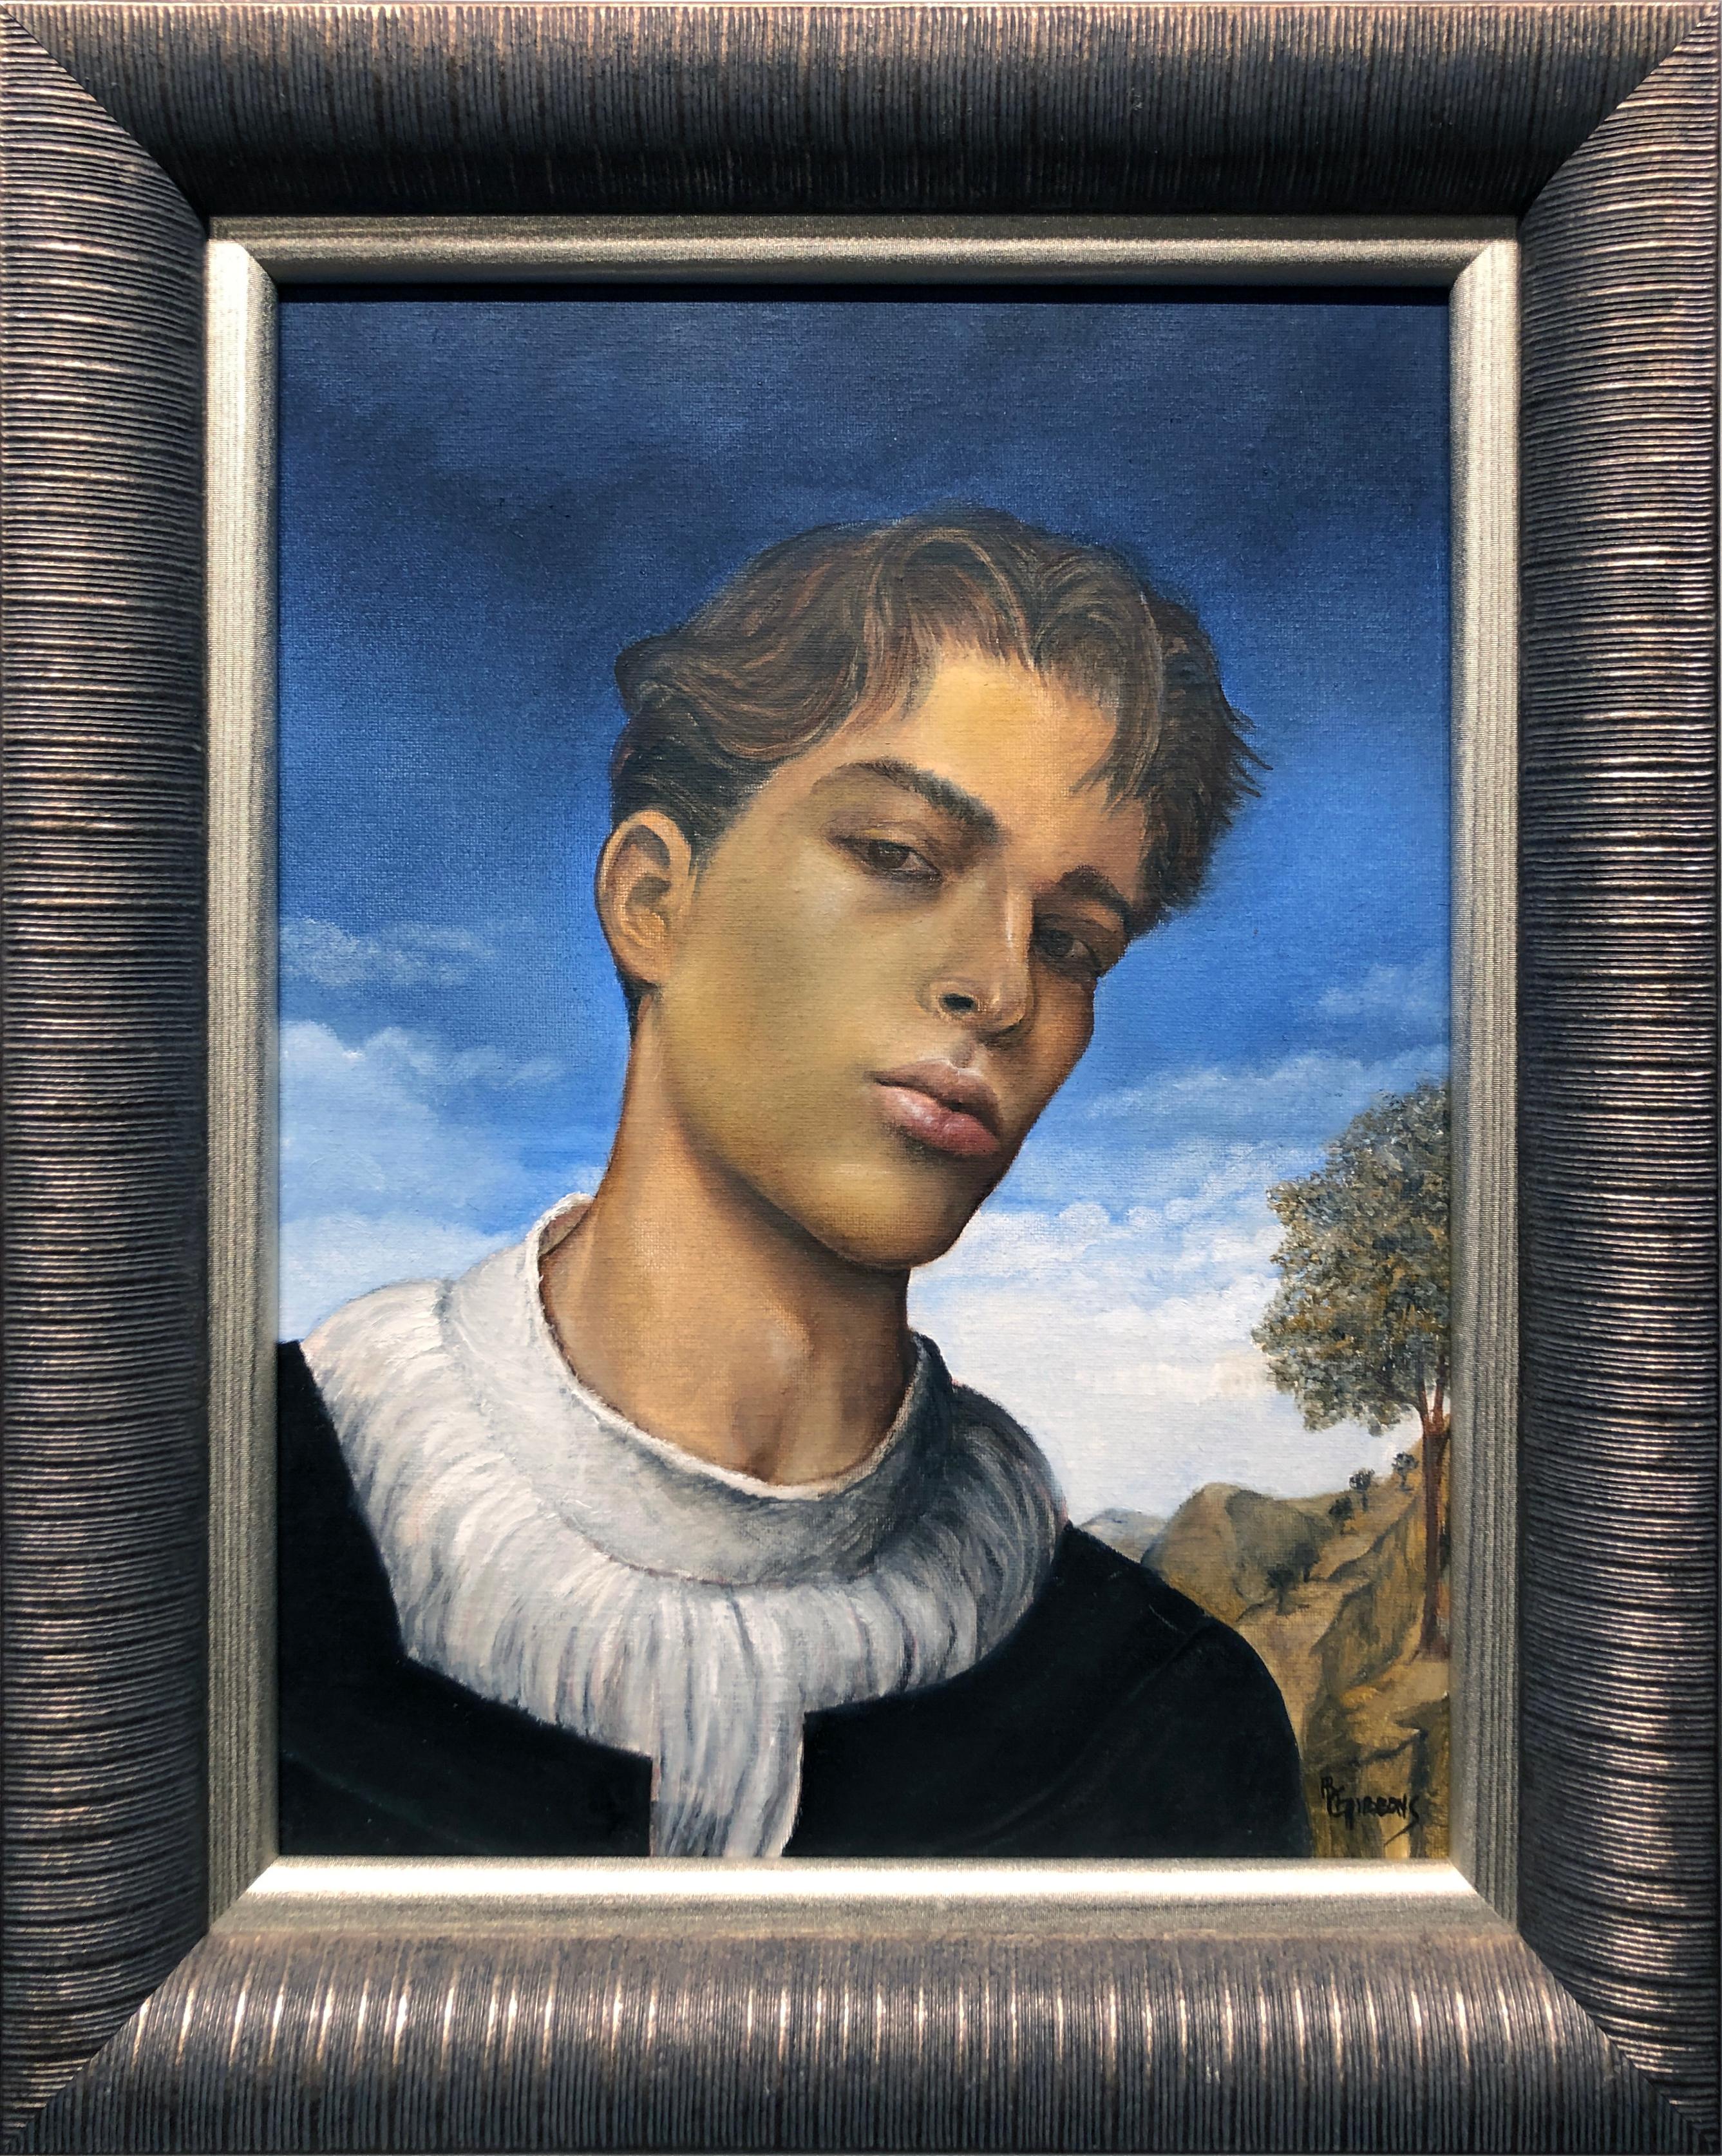 Richard Gibbons Figurative Painting - Youth, Portrait of Young Male, Renaissance Style Portraiture, Original Oil